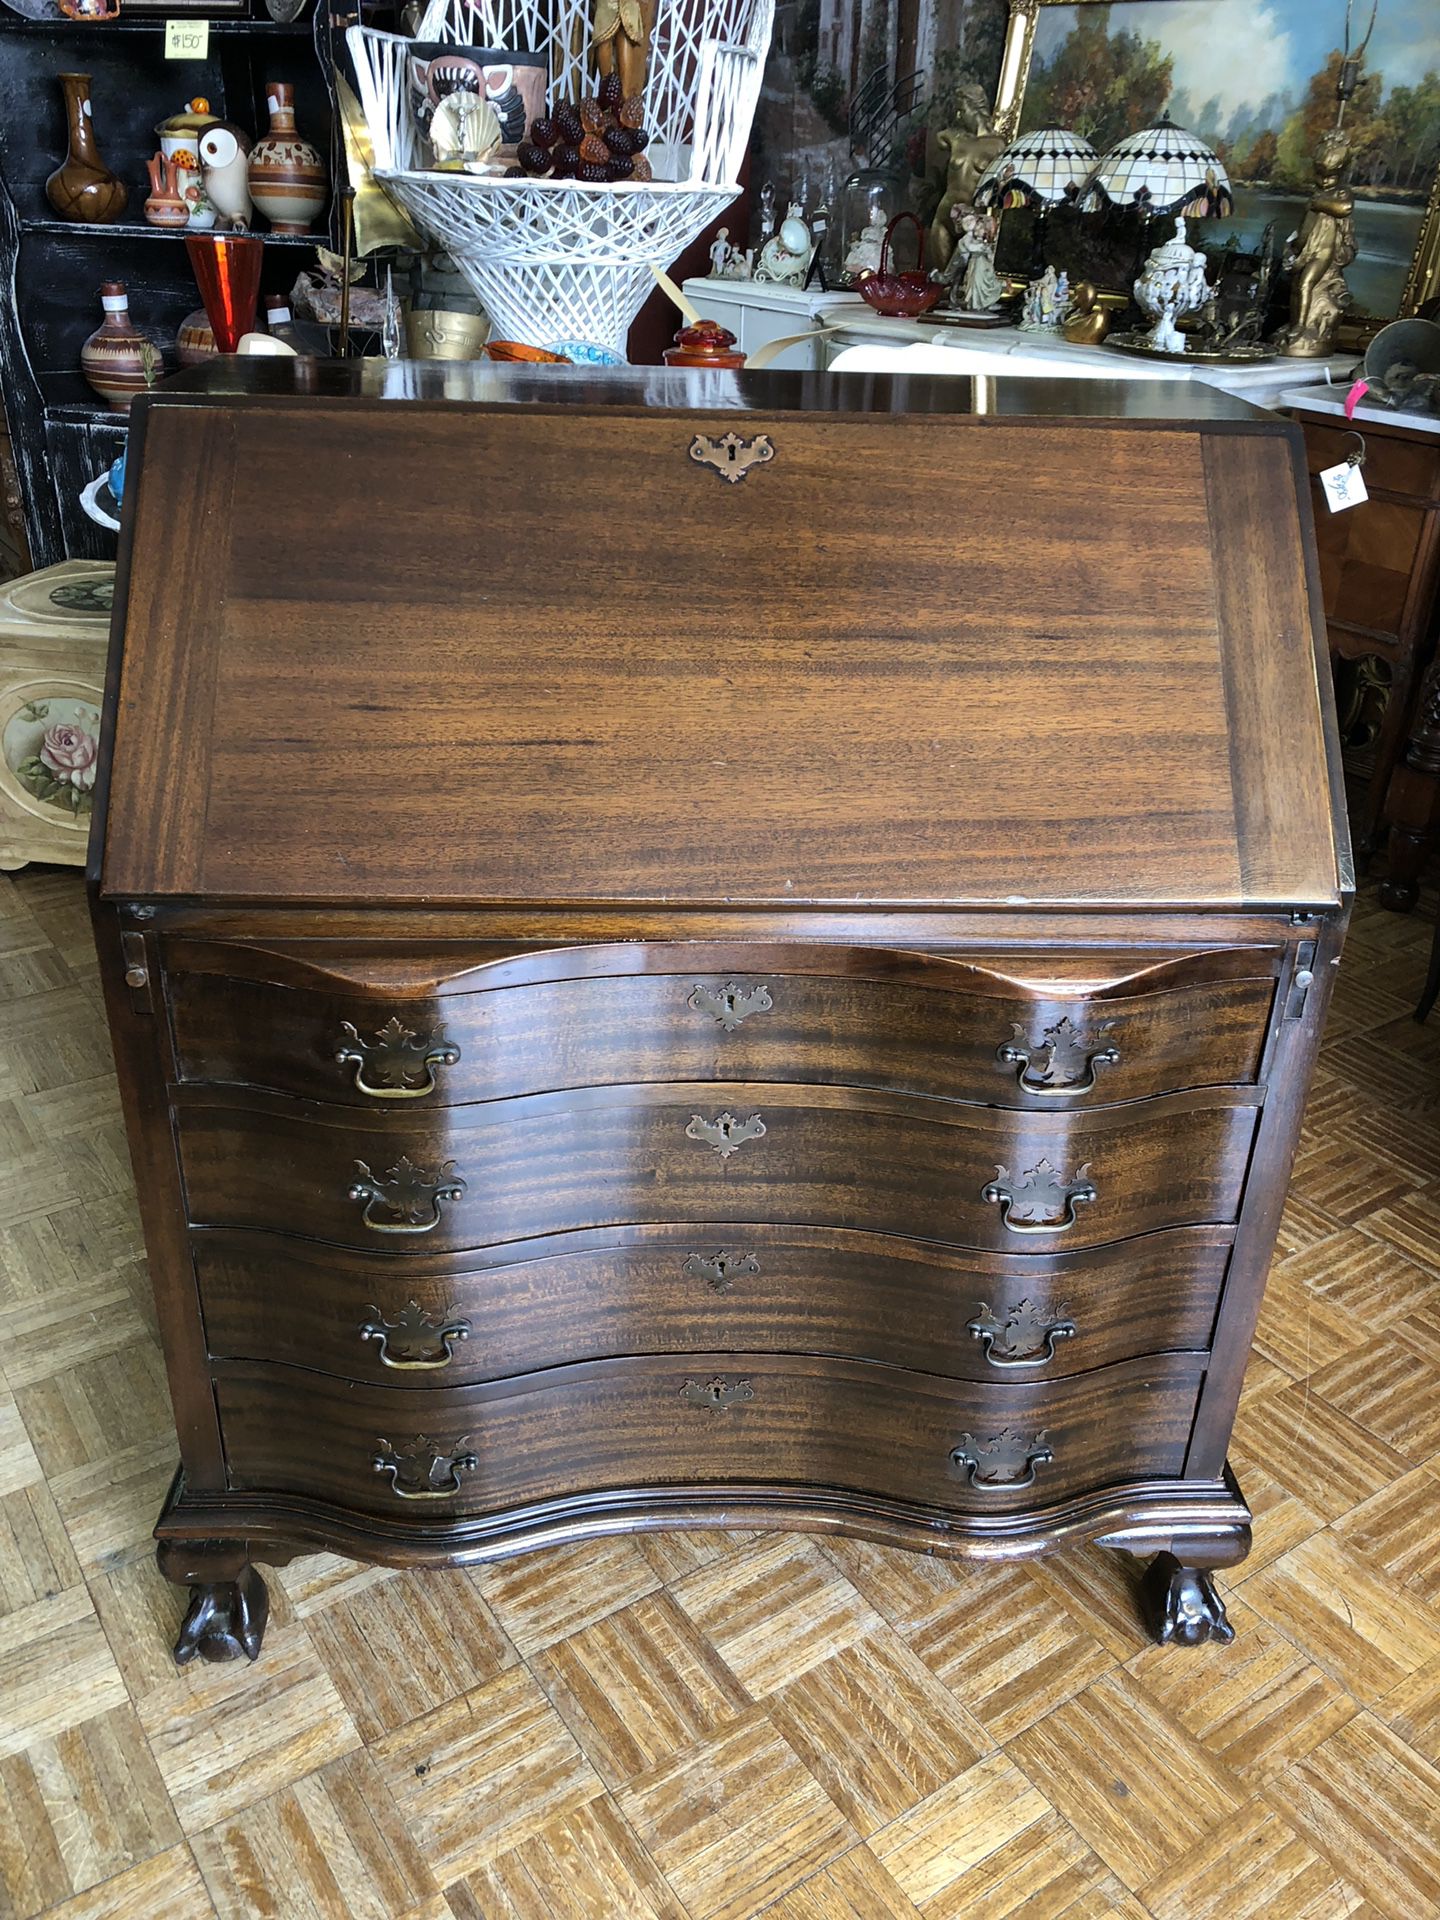 Antique secretary desk mahogany drop front with storage and original key 36 x 22 x 42”